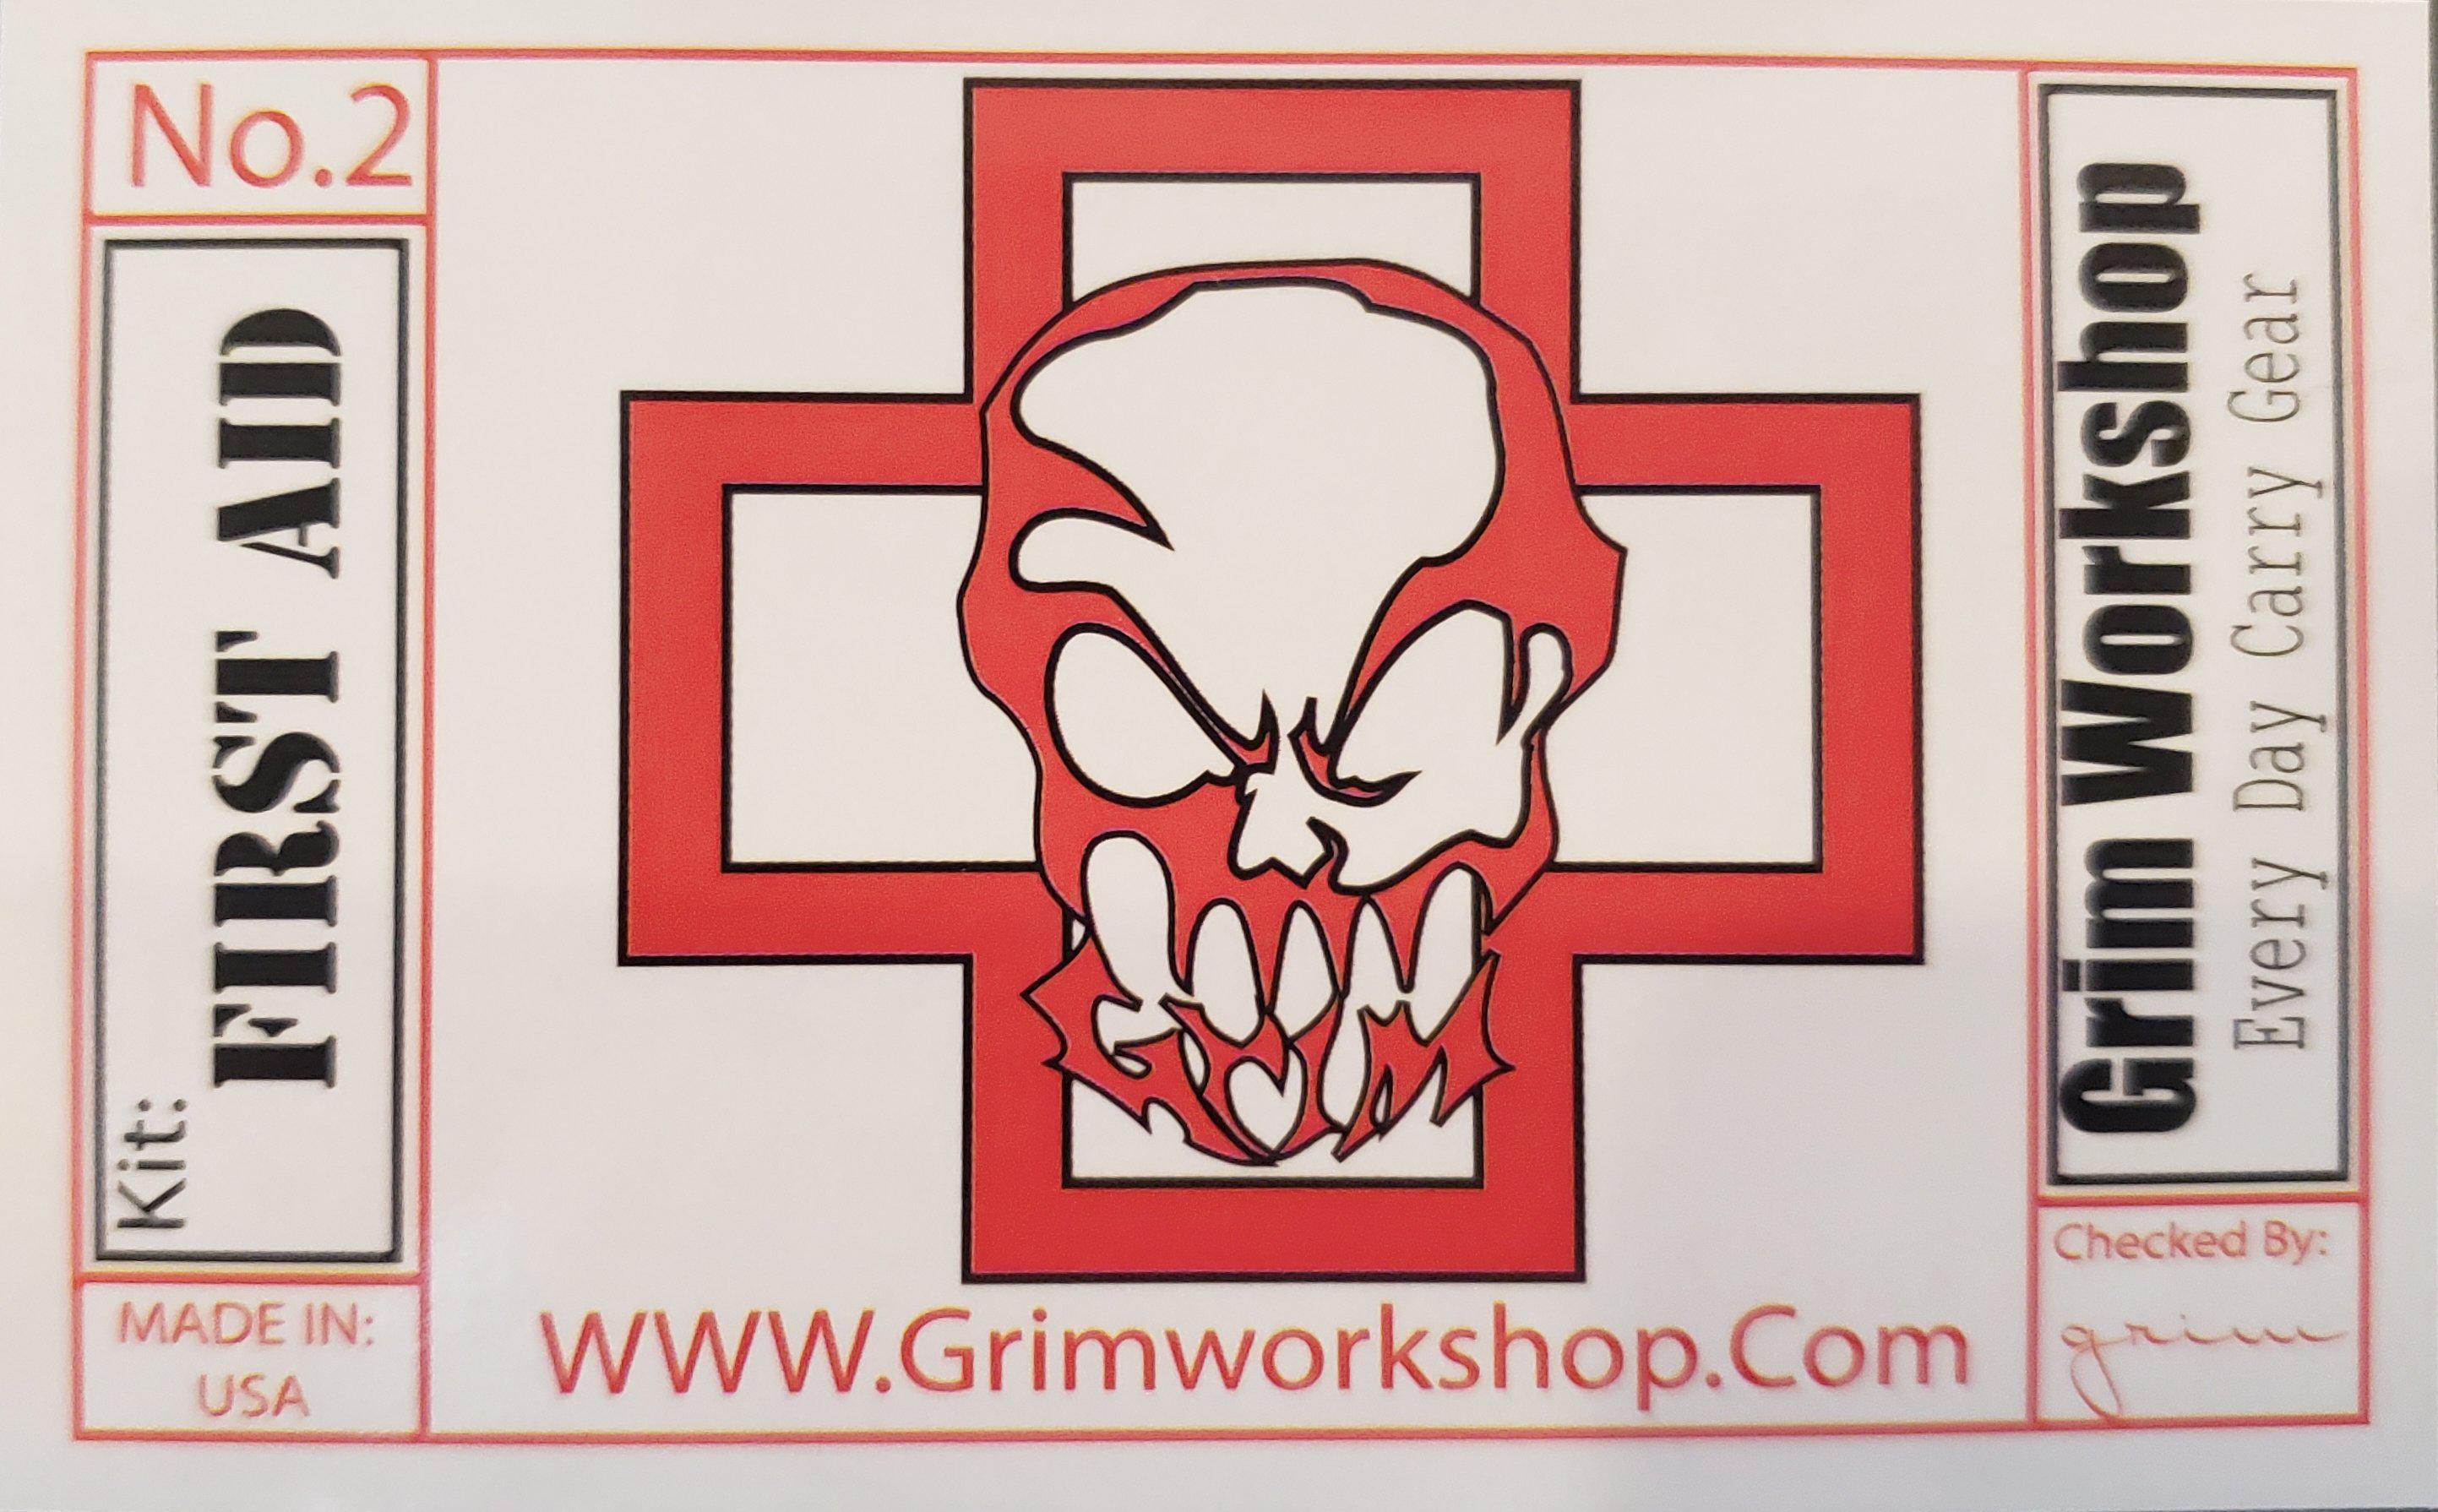 Grim Tin First Aid Kit Sticker-Grimworkshop-bugoutbag-bushcraft-edc-gear-edctool-everydaycarry-survivalcard-survivalkit-wilderness-prepping-toolkit